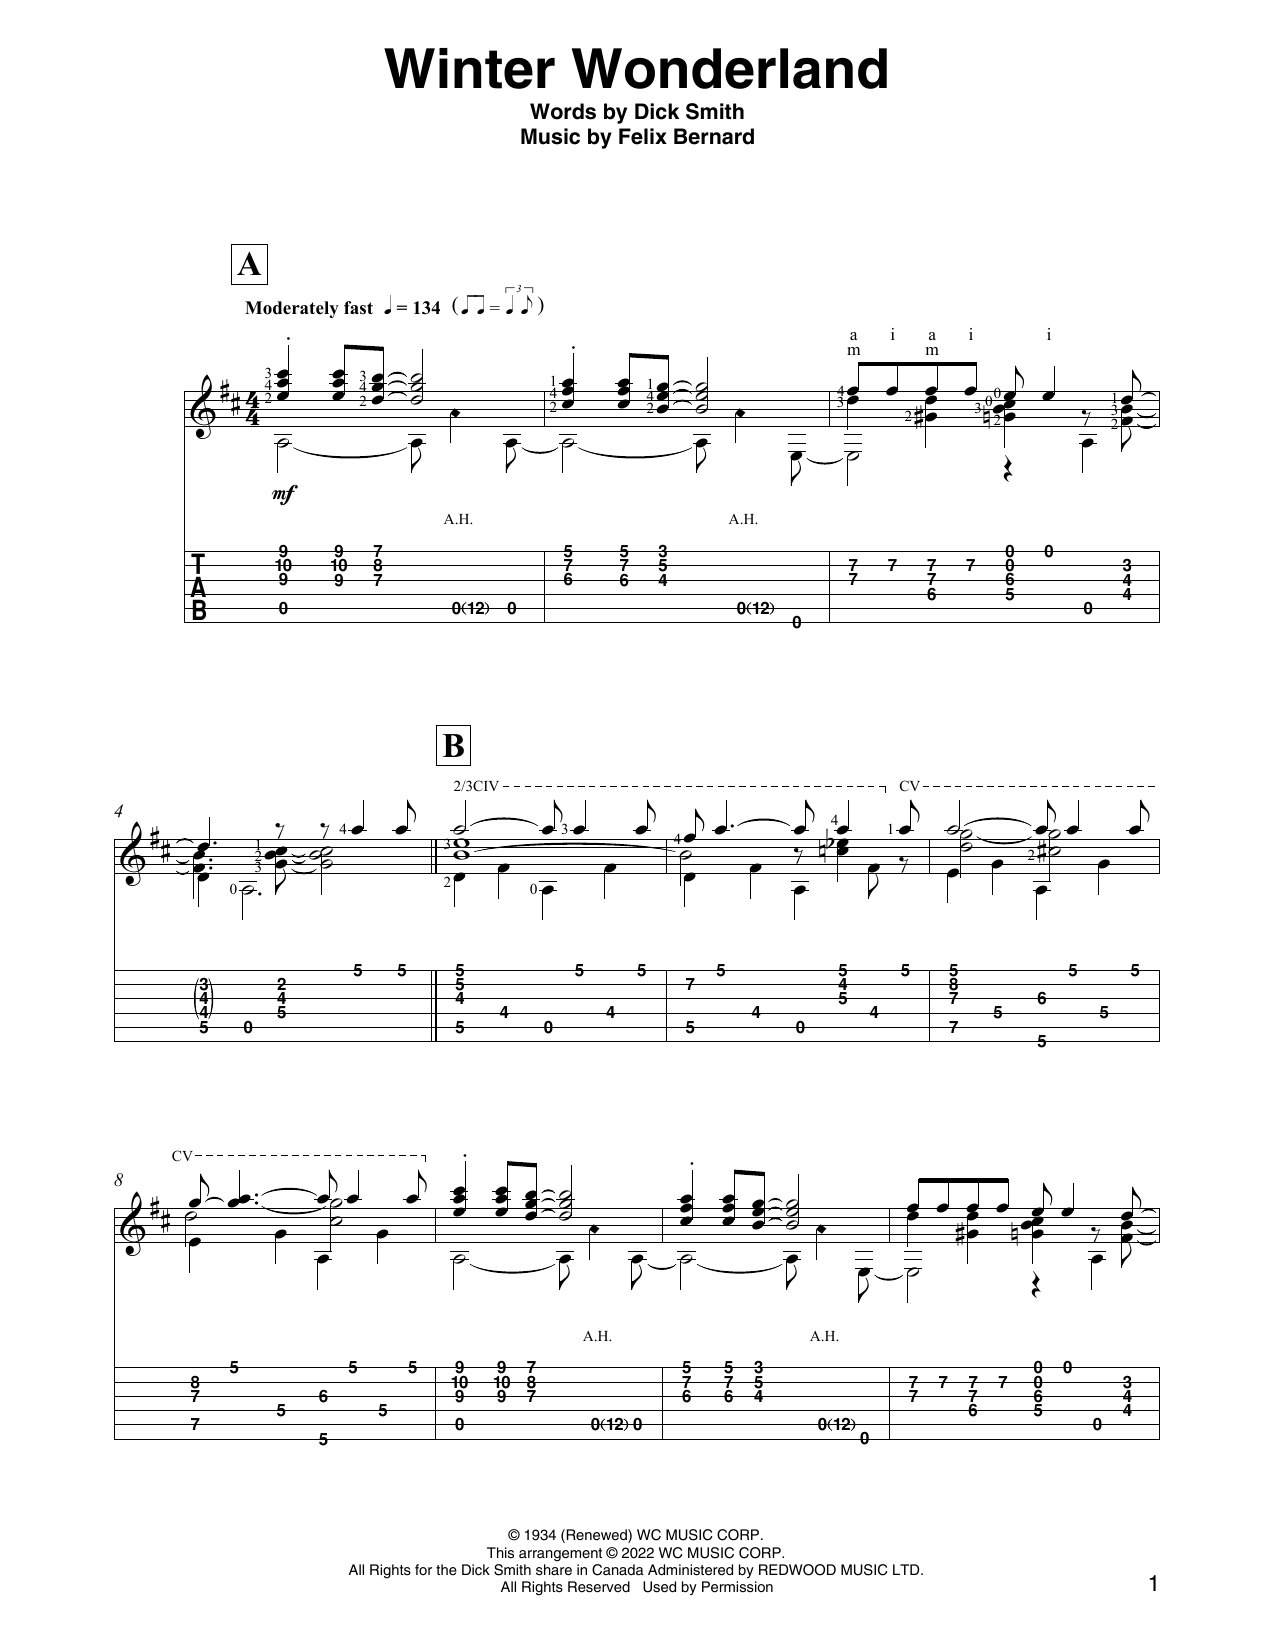 Felix Bernard Winter Wonderland (arr. David Jaggs) Sheet Music Notes & Chords for Solo Guitar - Download or Print PDF